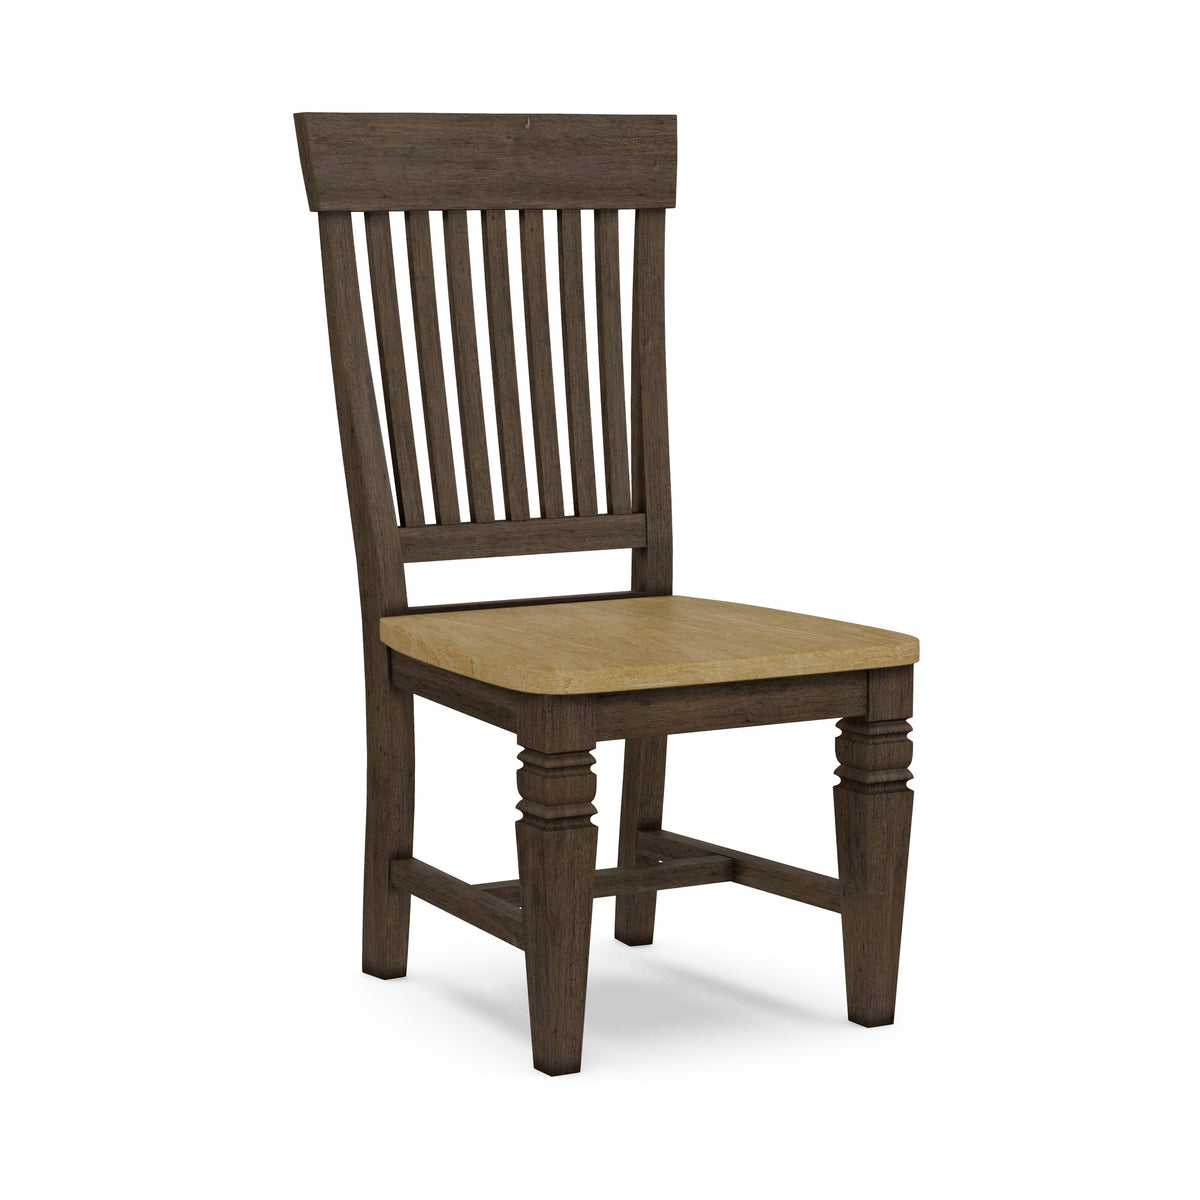 Seattle Chair